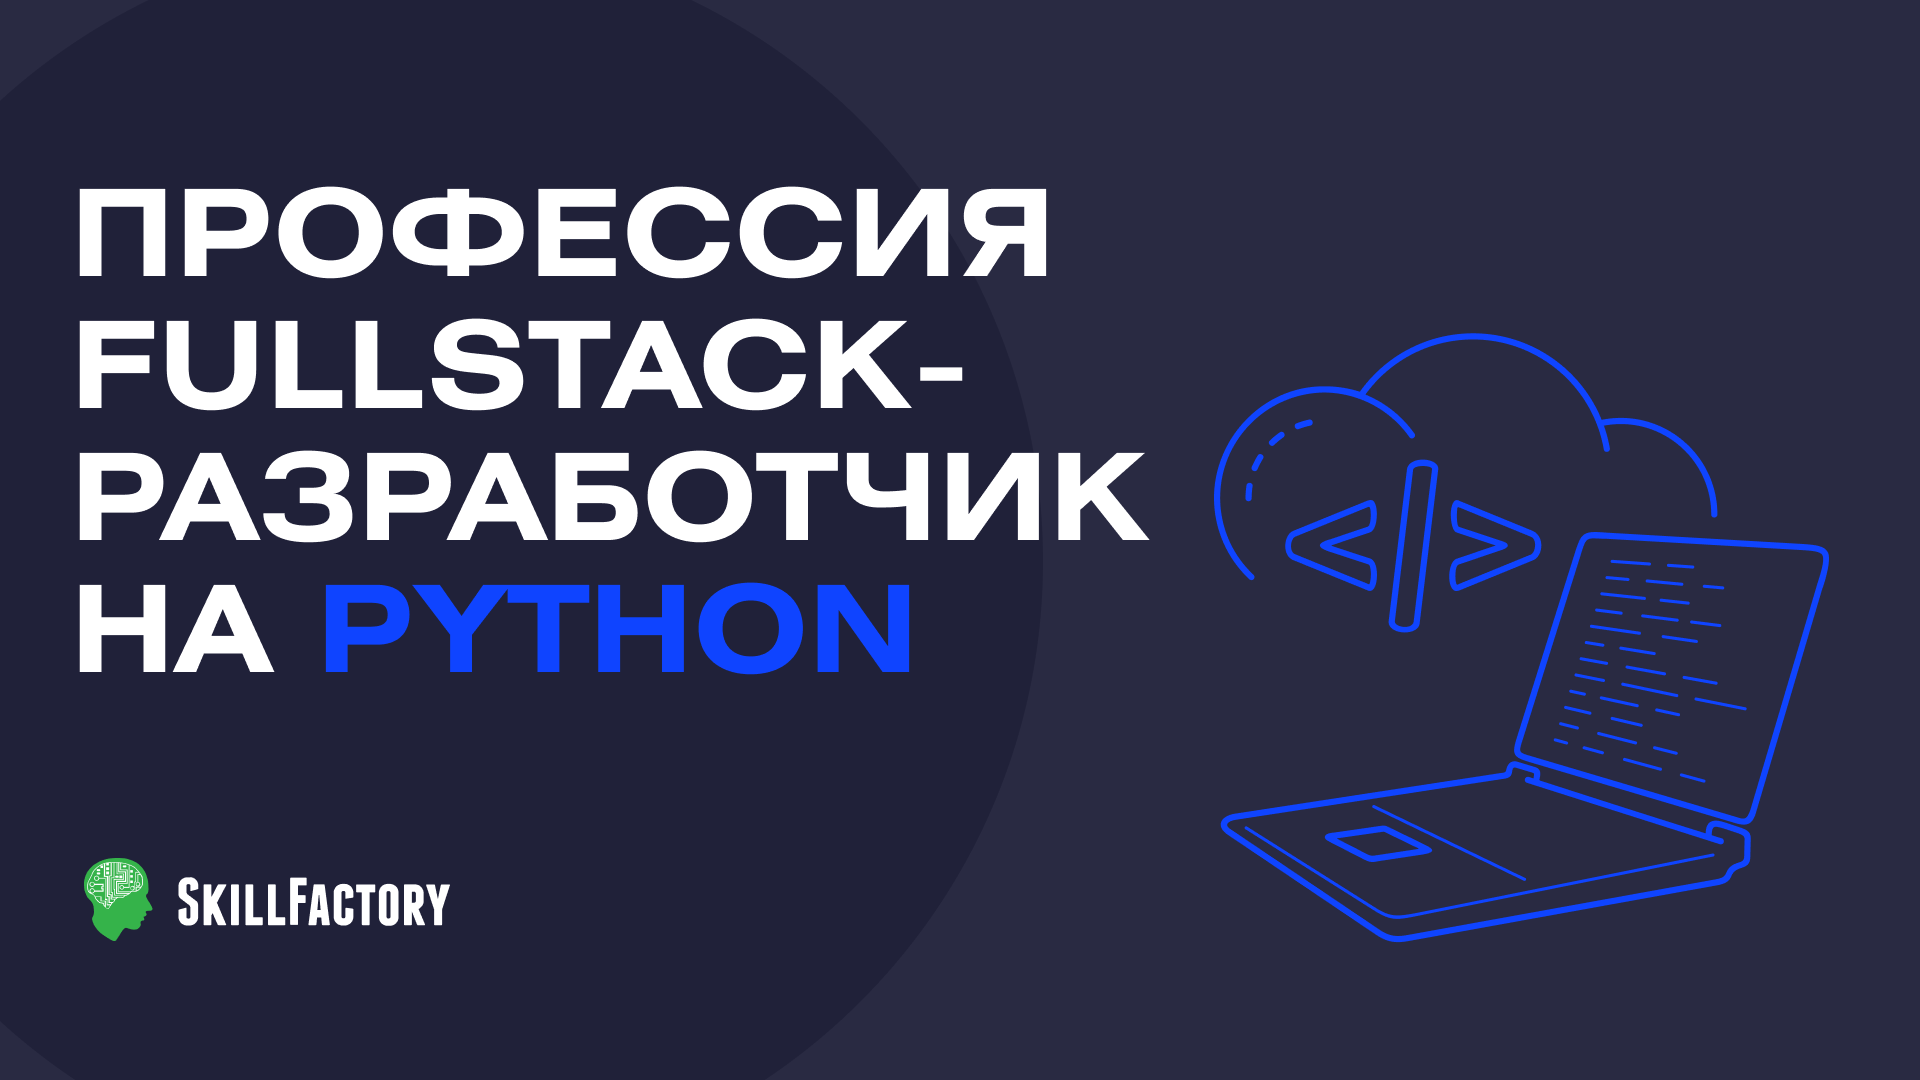 Профессия Fullstack-разработчик на Python профессия fullstack разработчик на python